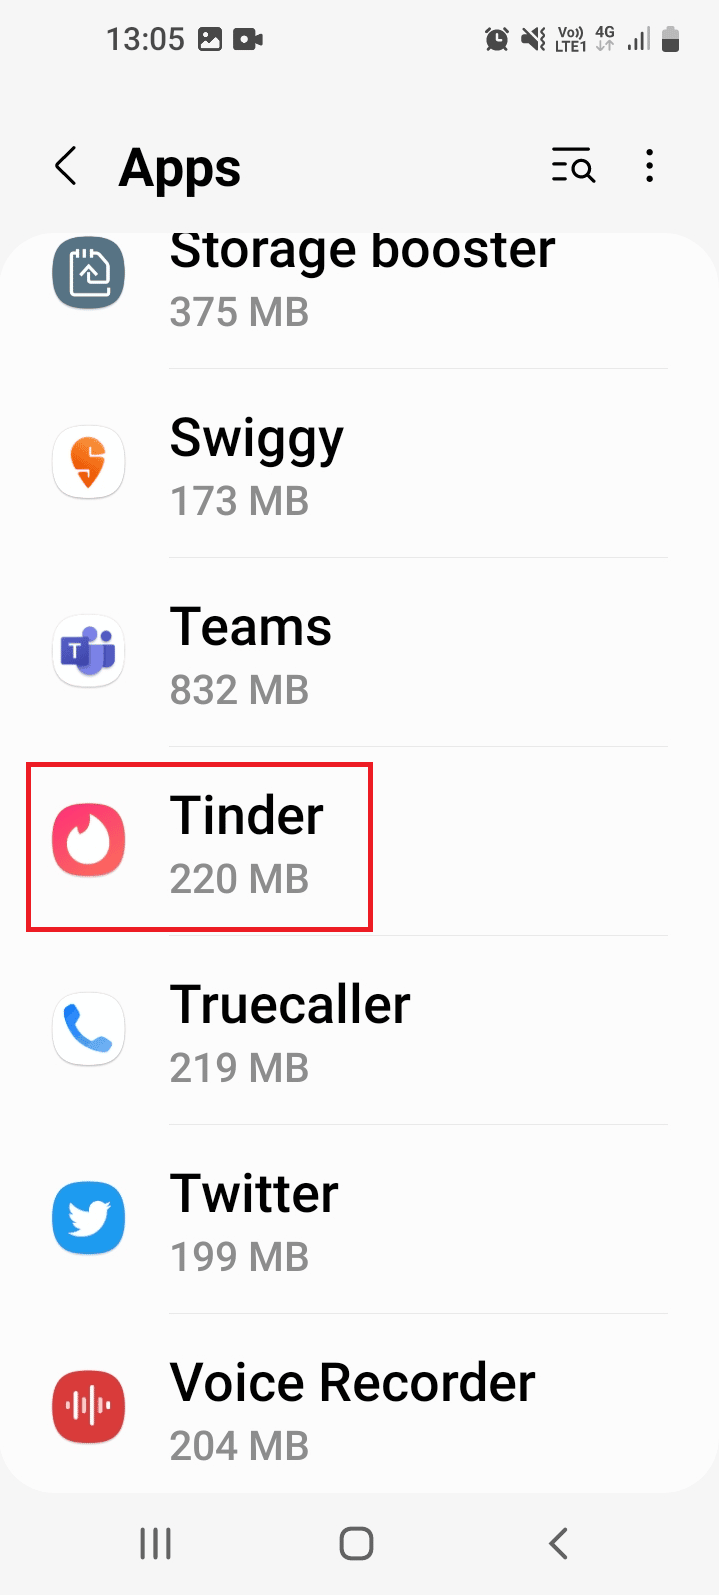 Tap on the Tinder app